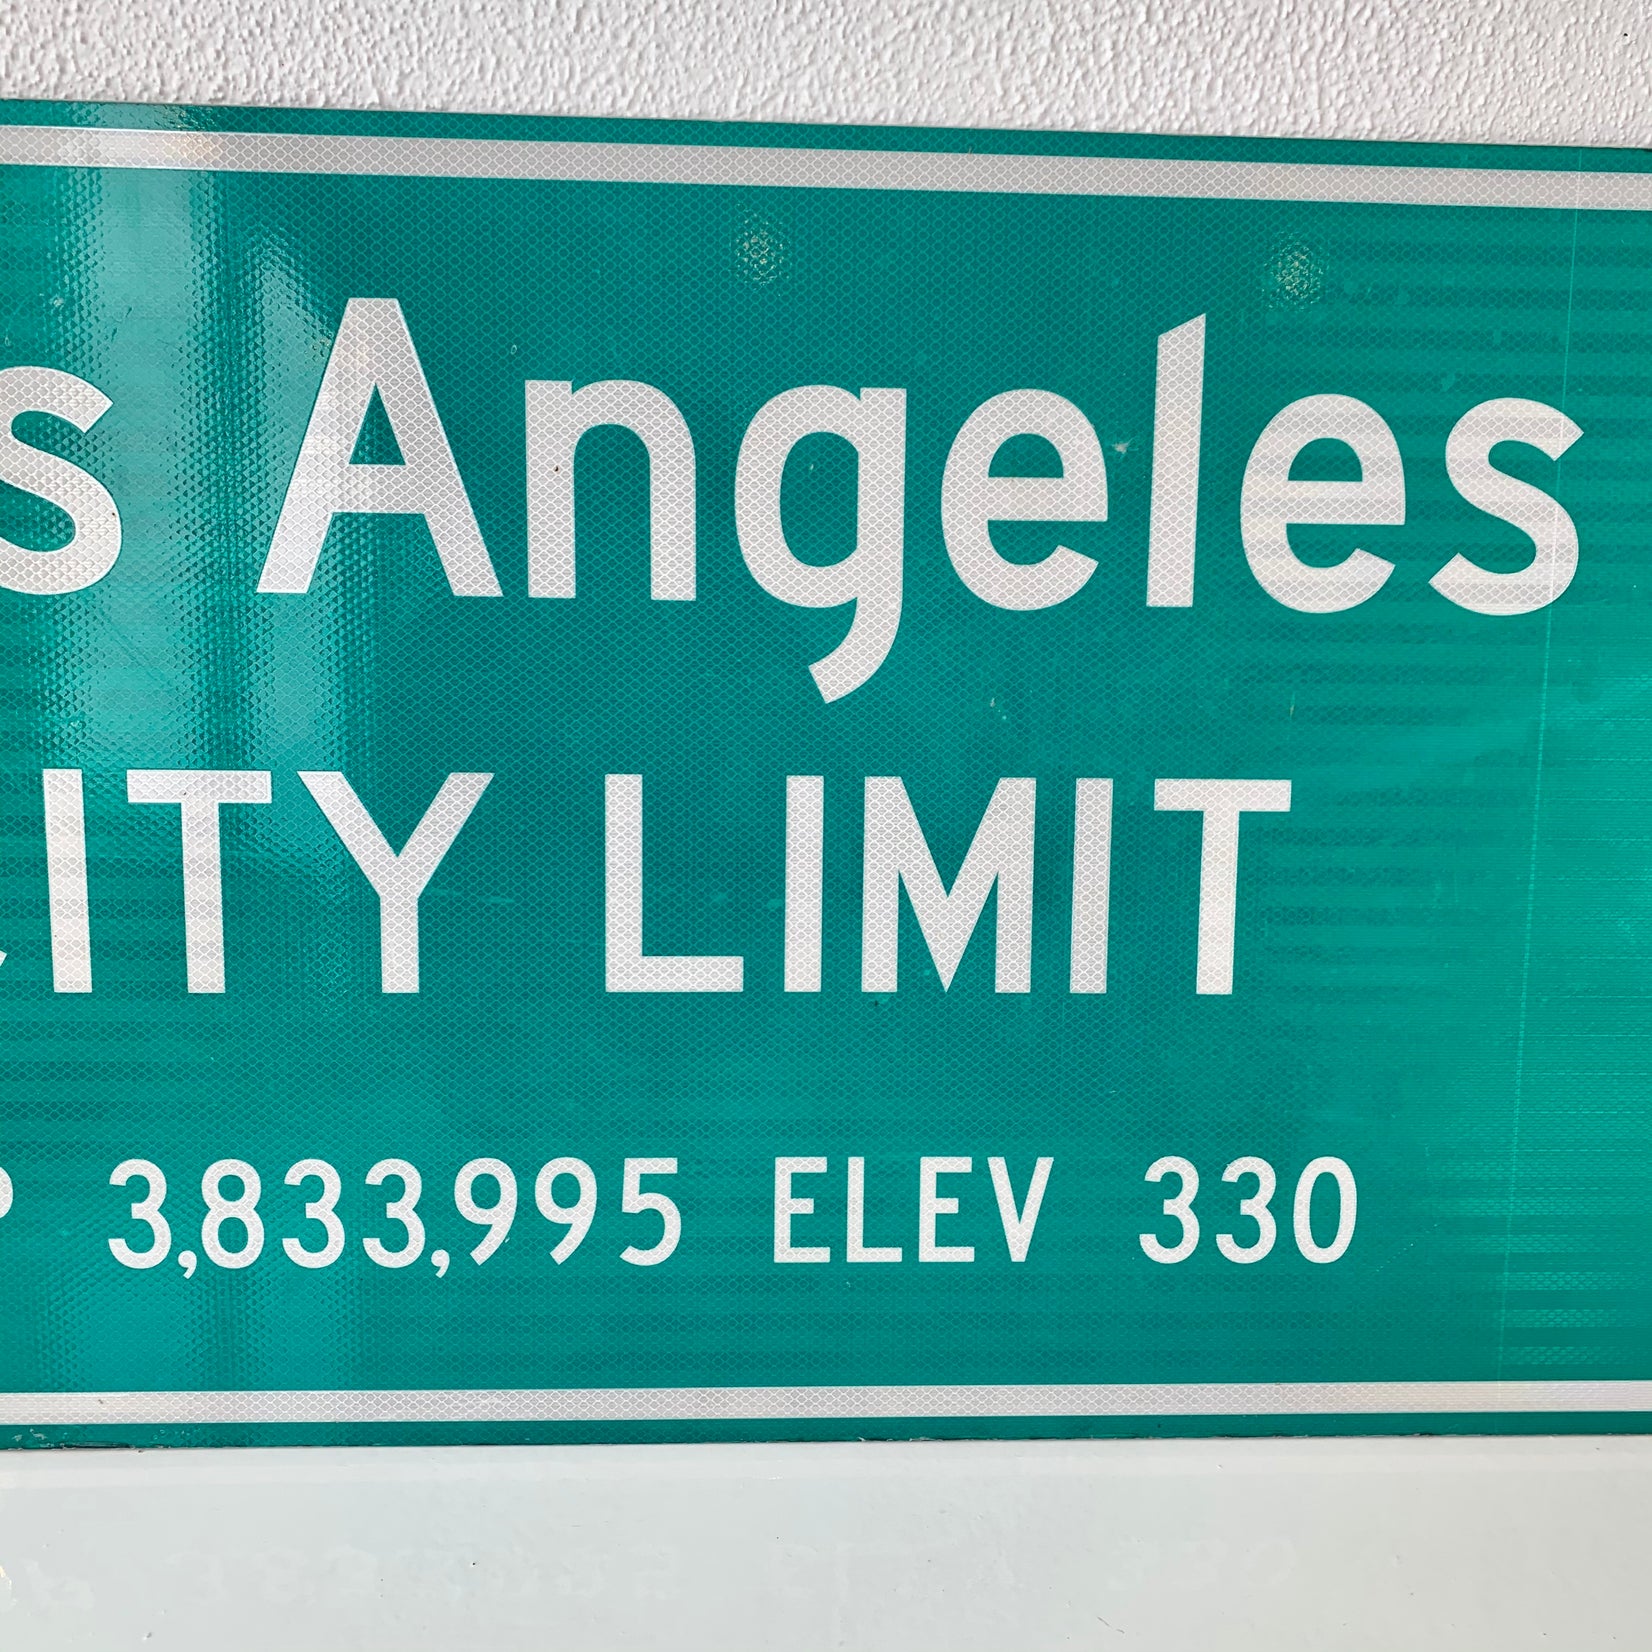 Los Angeles Freeway City Limit Sign